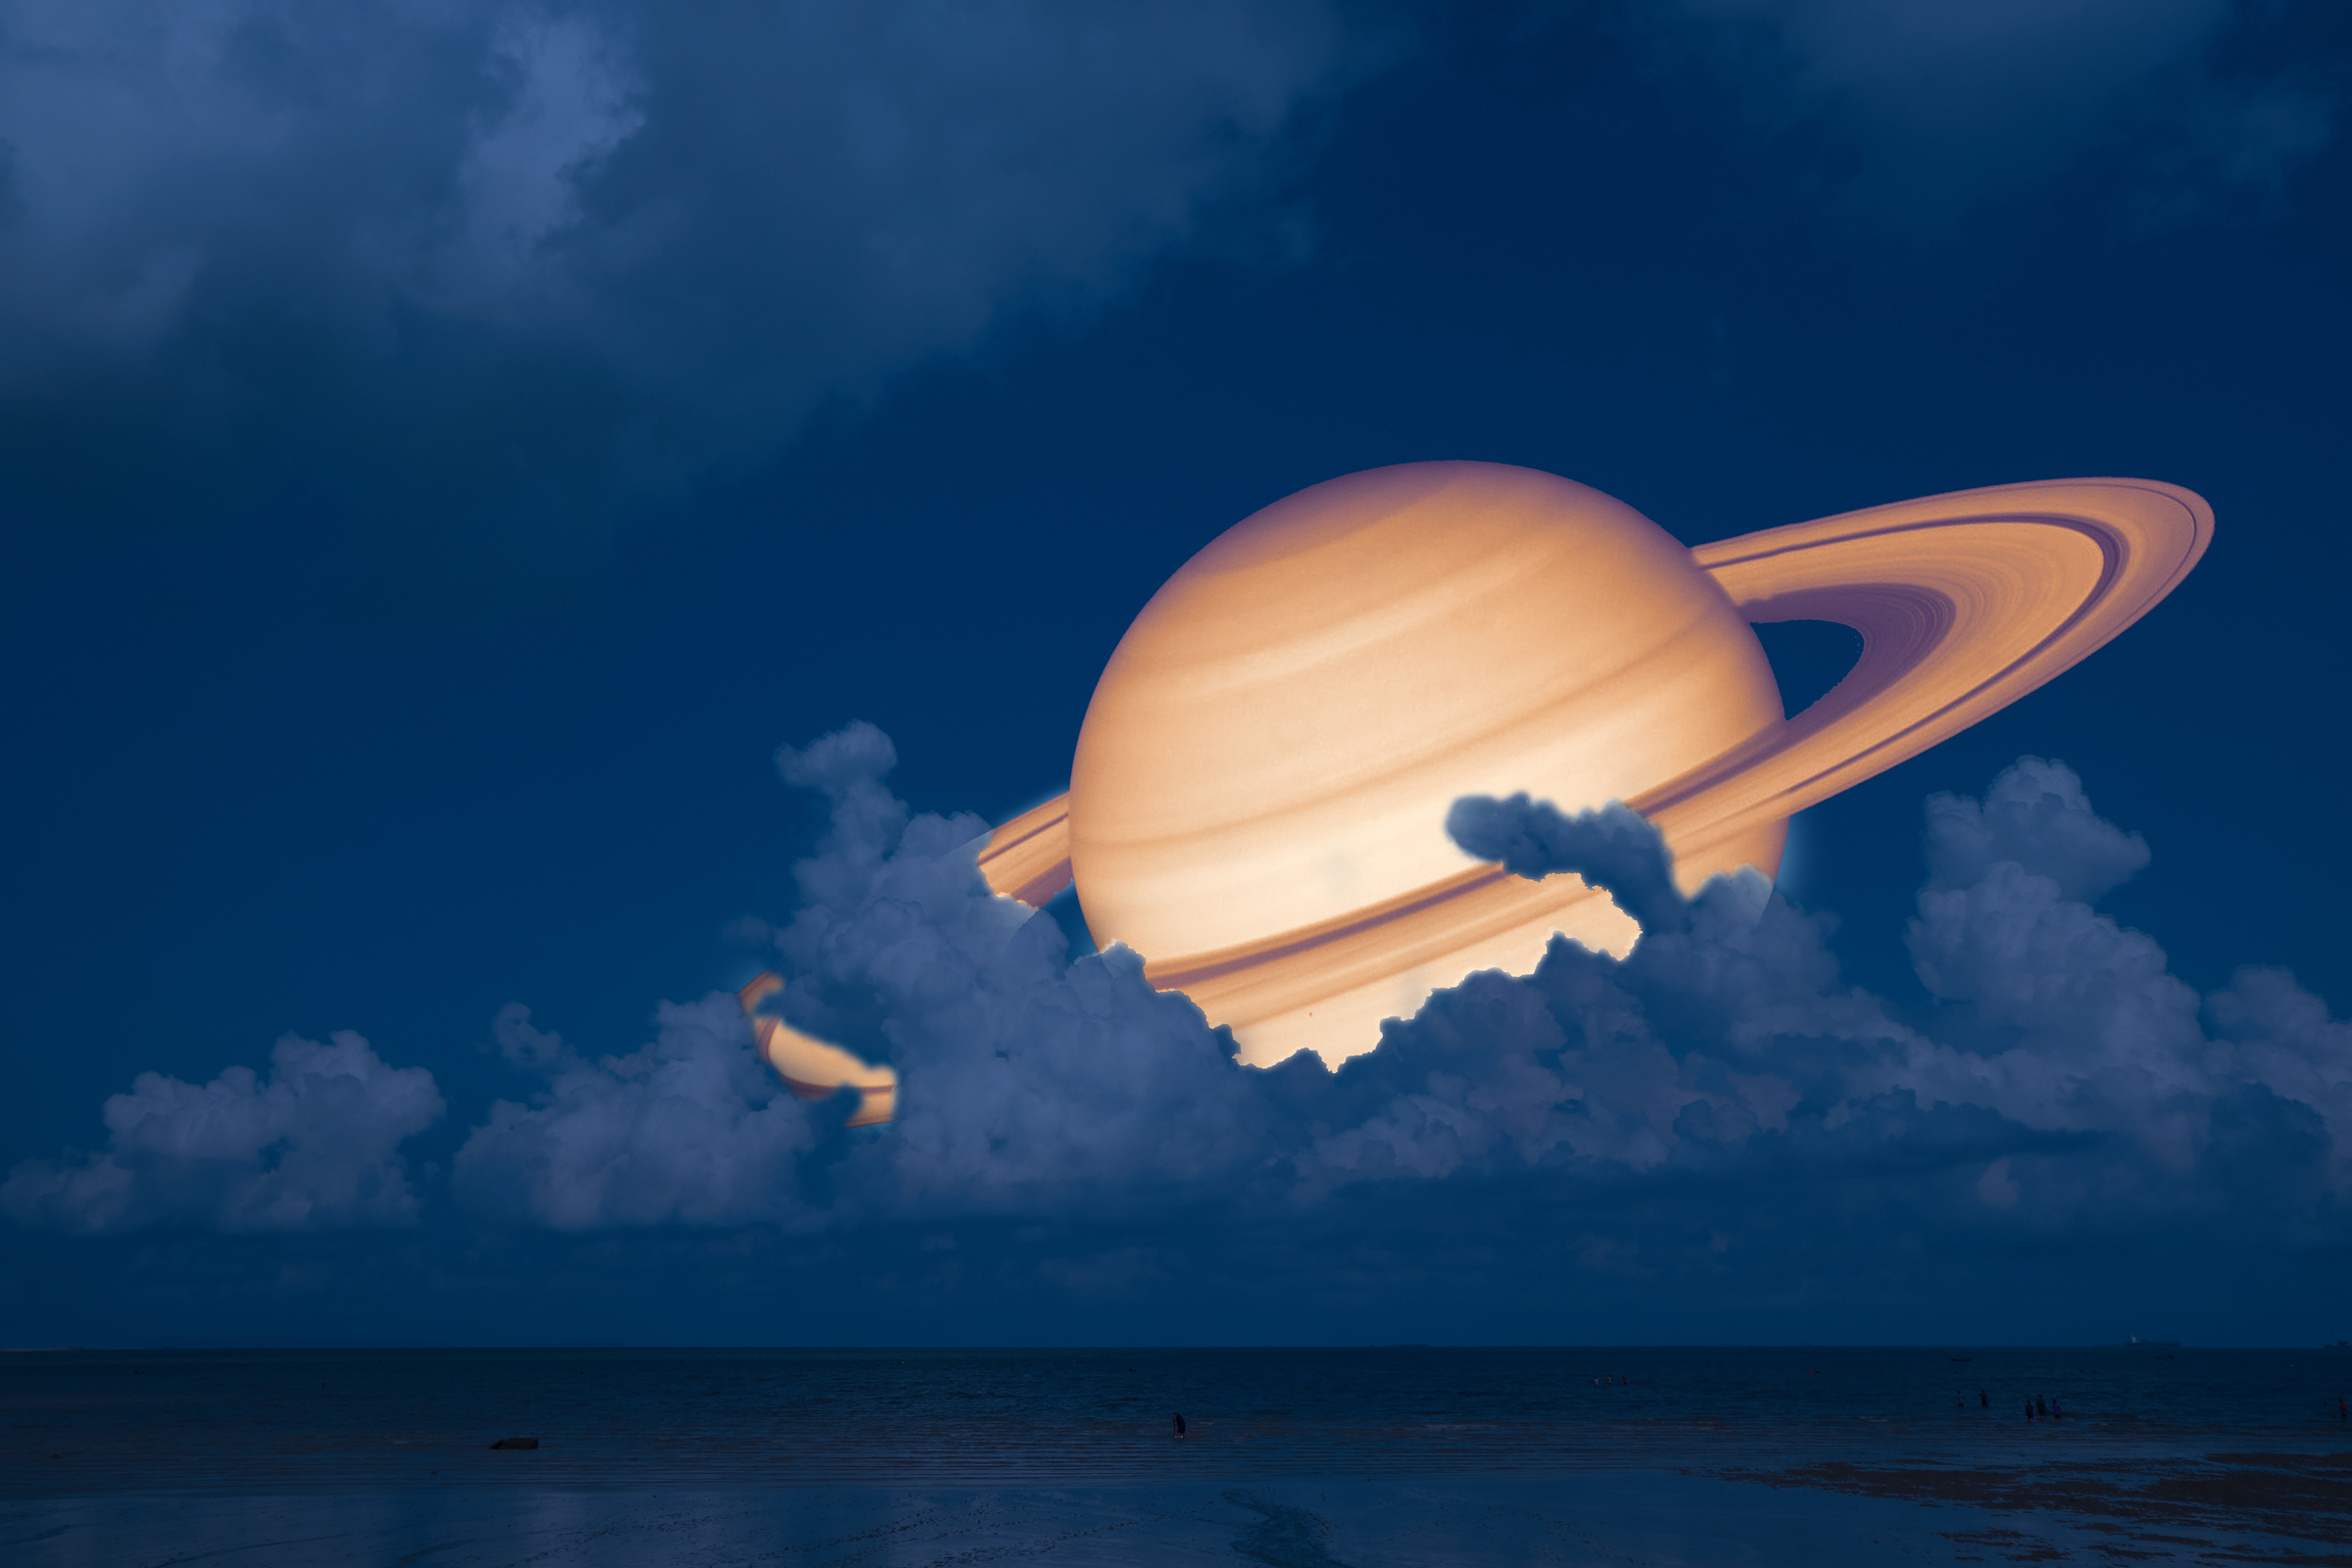 Saturn back night cloud on sea ,concept Saturn near Earth